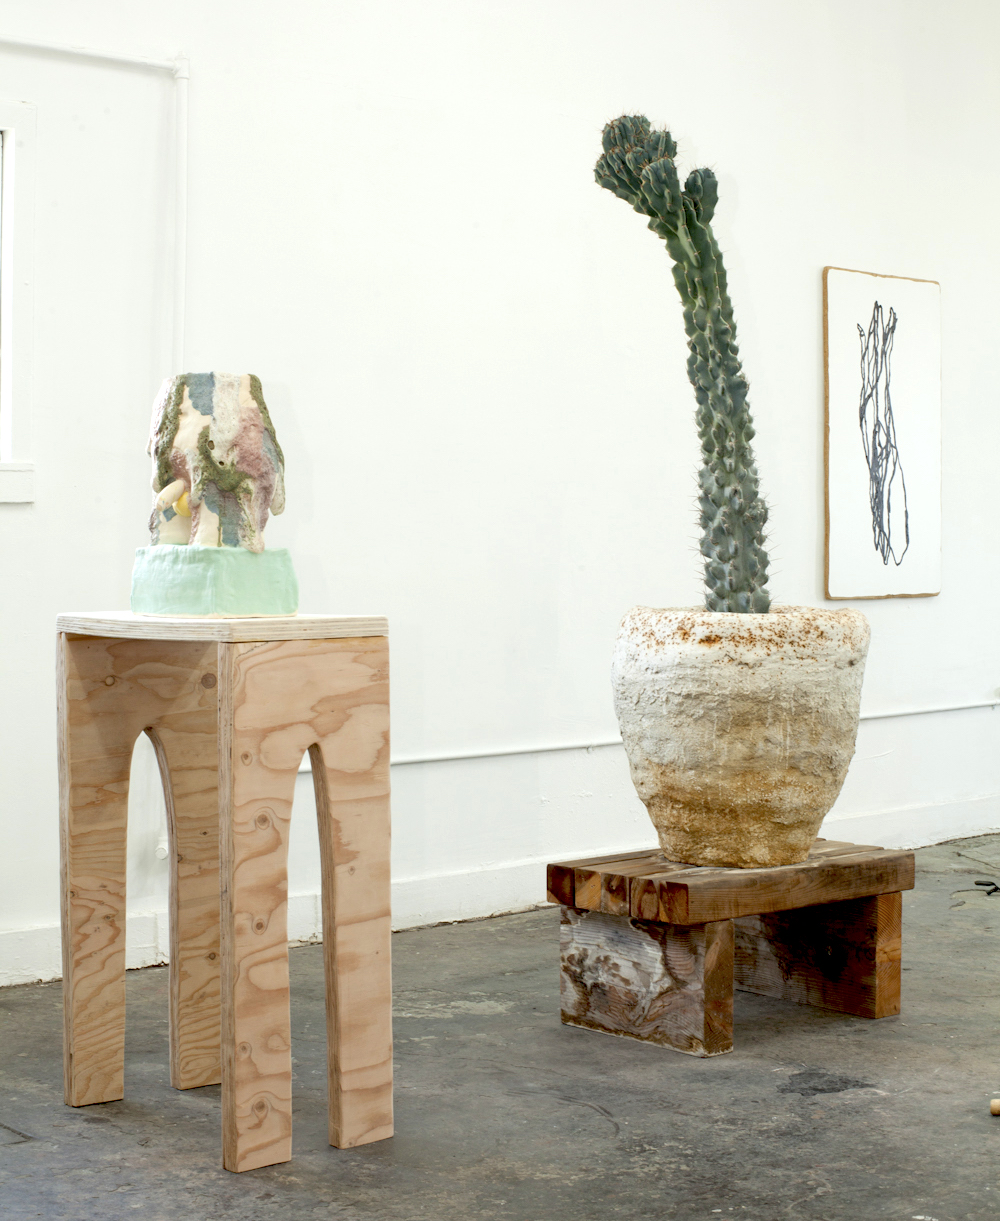 (Left to Right) Alice Lang, Better Half 2, 2017,  Lava glaze on ceramic w/ plywood base   |   John Zappas, Big John Pot, 2017, Hydracal and redwood base 